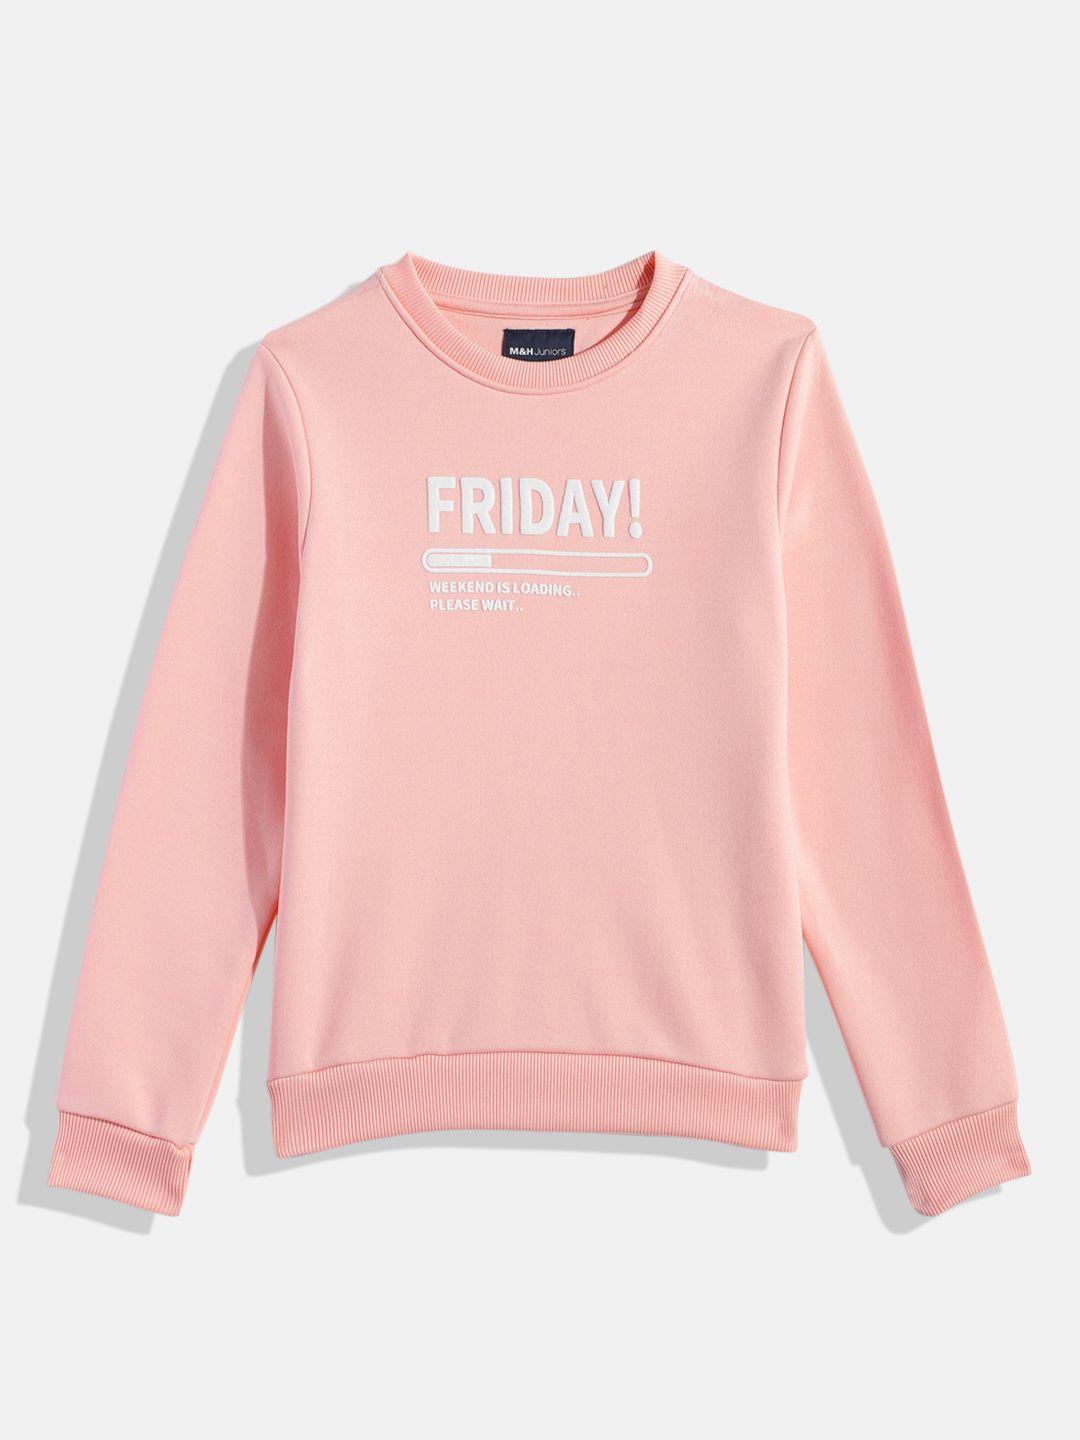 m&h juniors boys pink printed sweatshirt